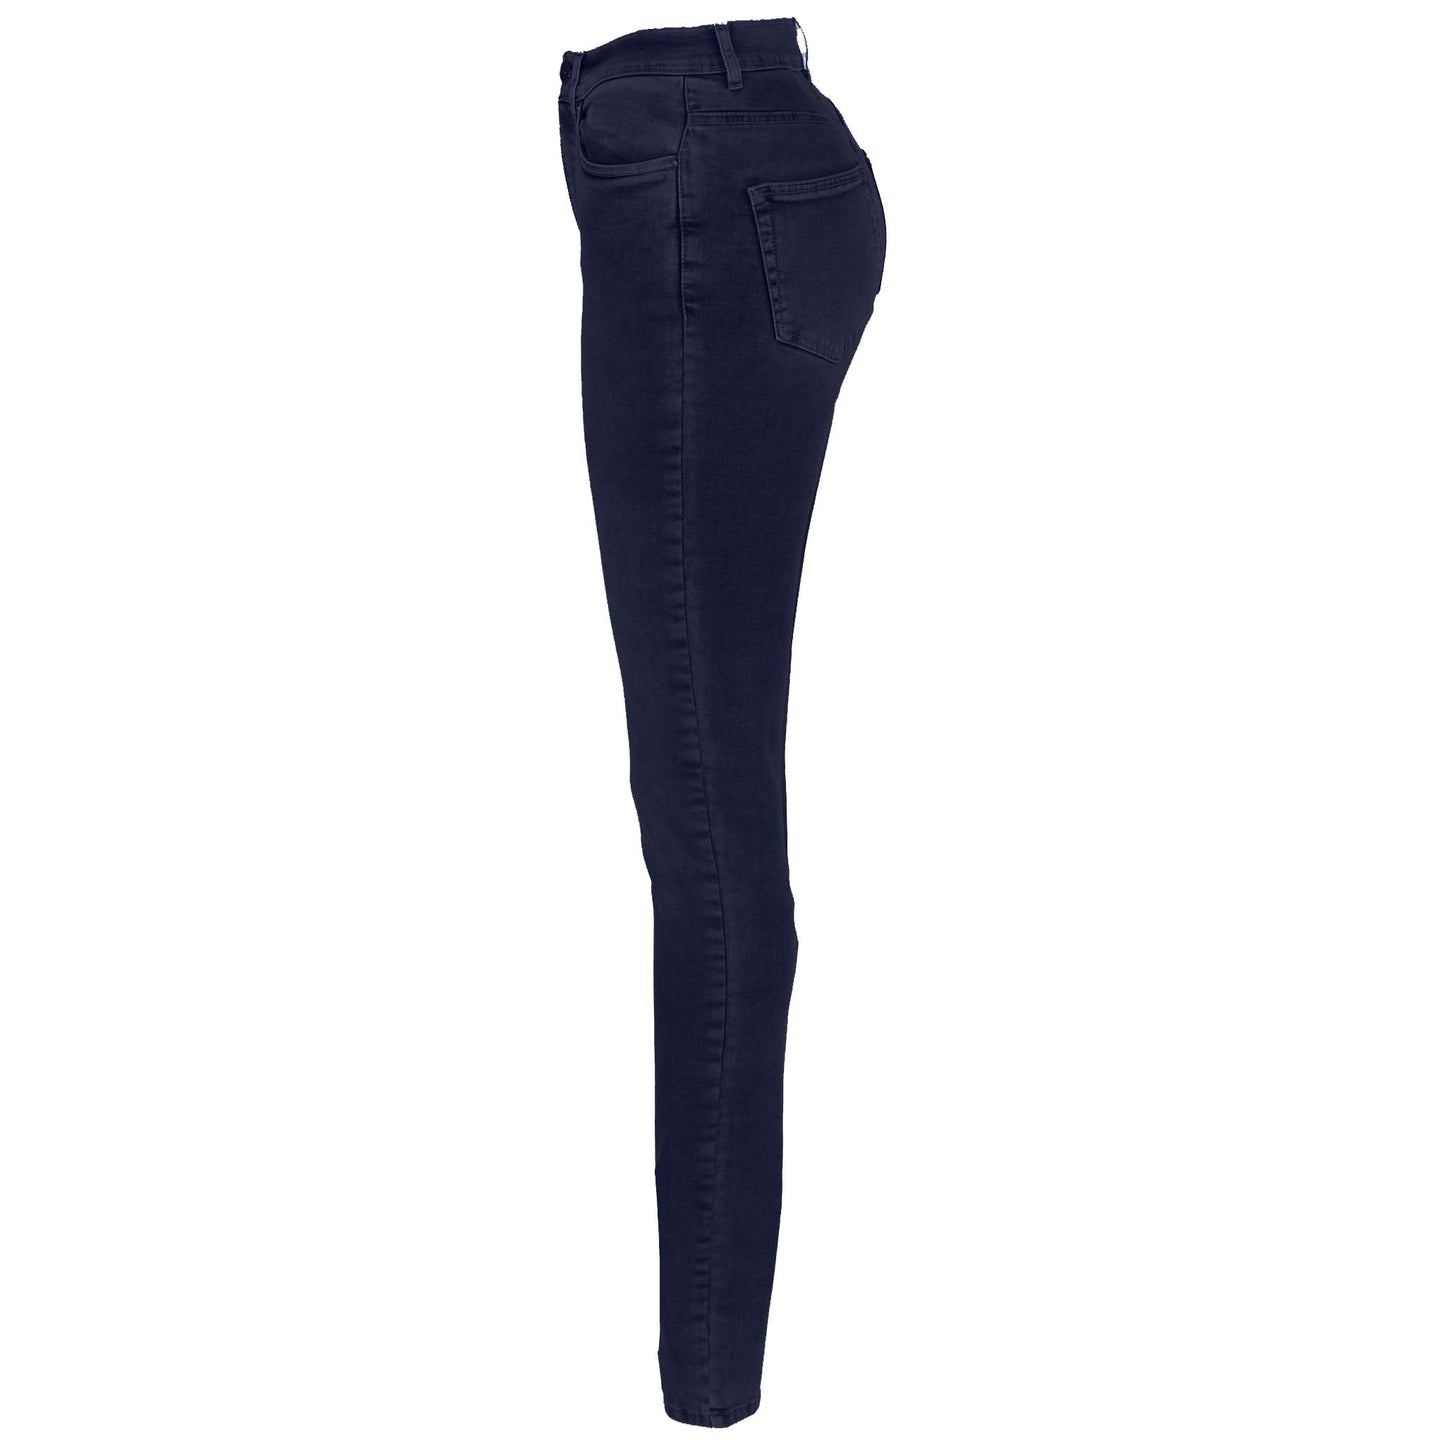 kleding lange vrouwen bloomers jeans daphne darkblue